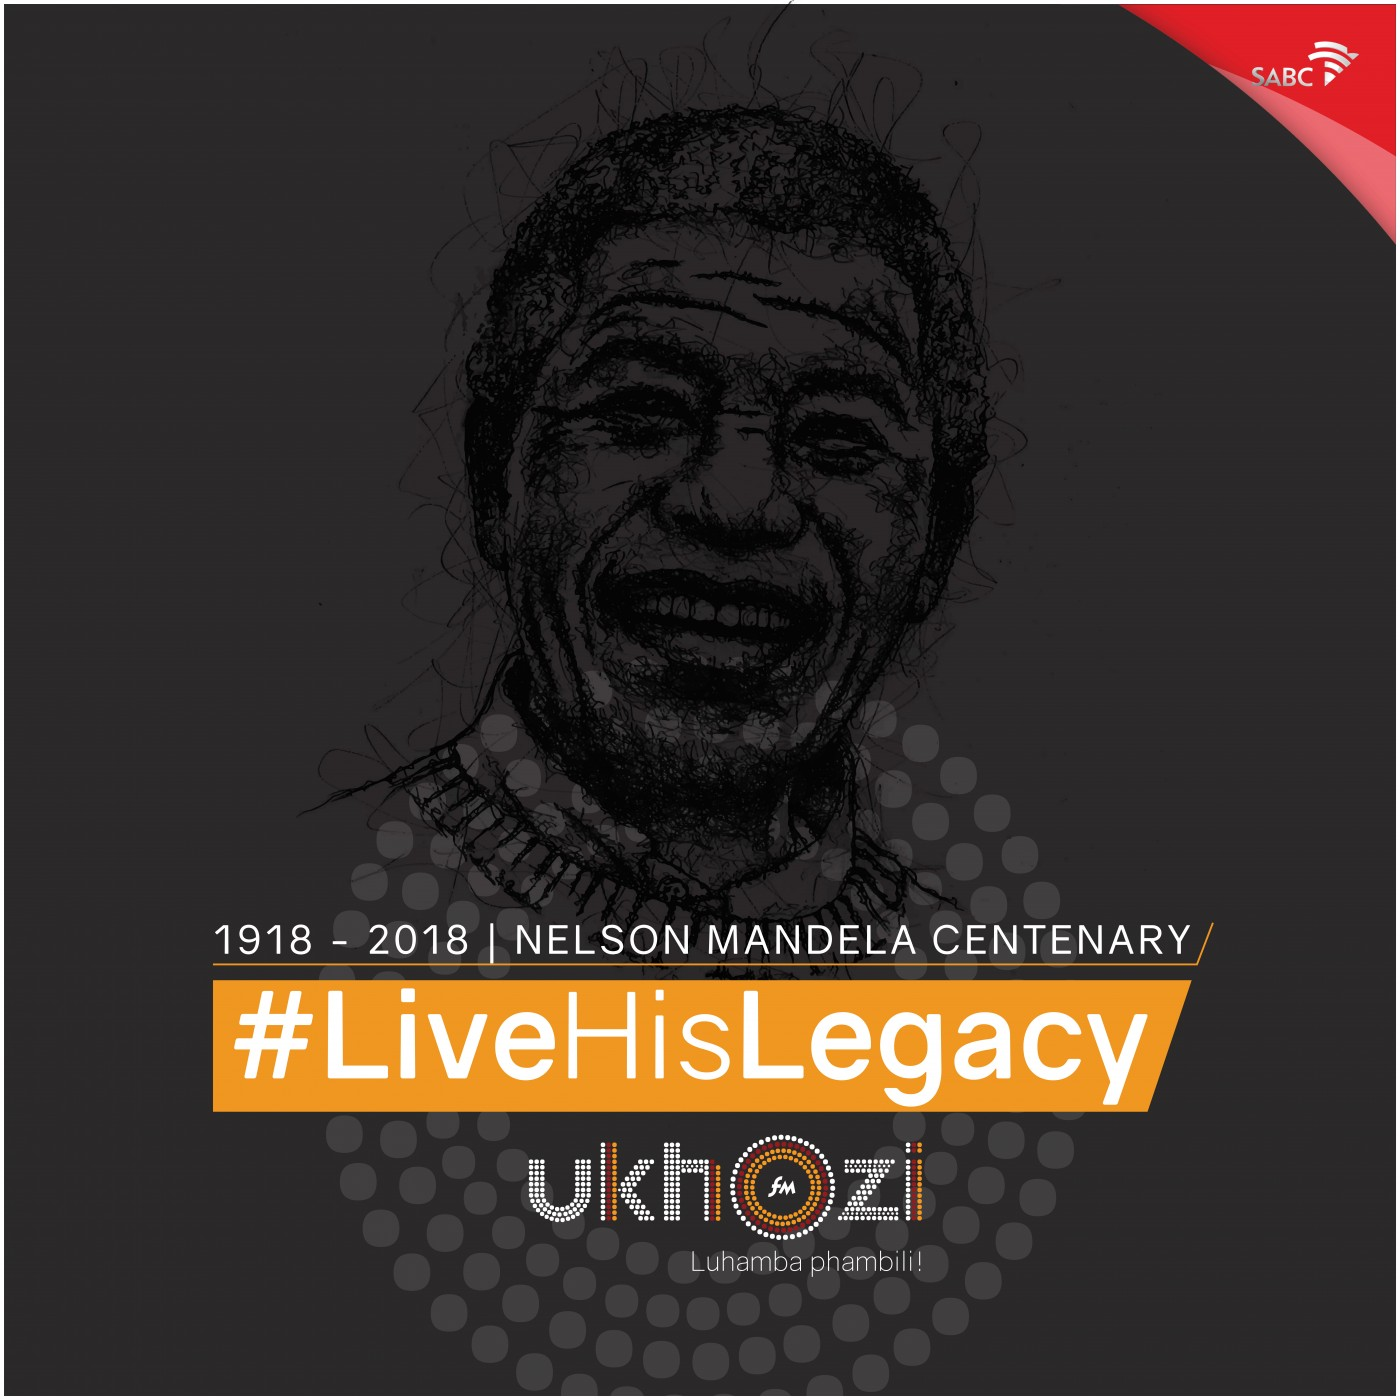 #VMBS Mandela 50 Days to go! #LiveHisLegacy #ActionAgainstPovery